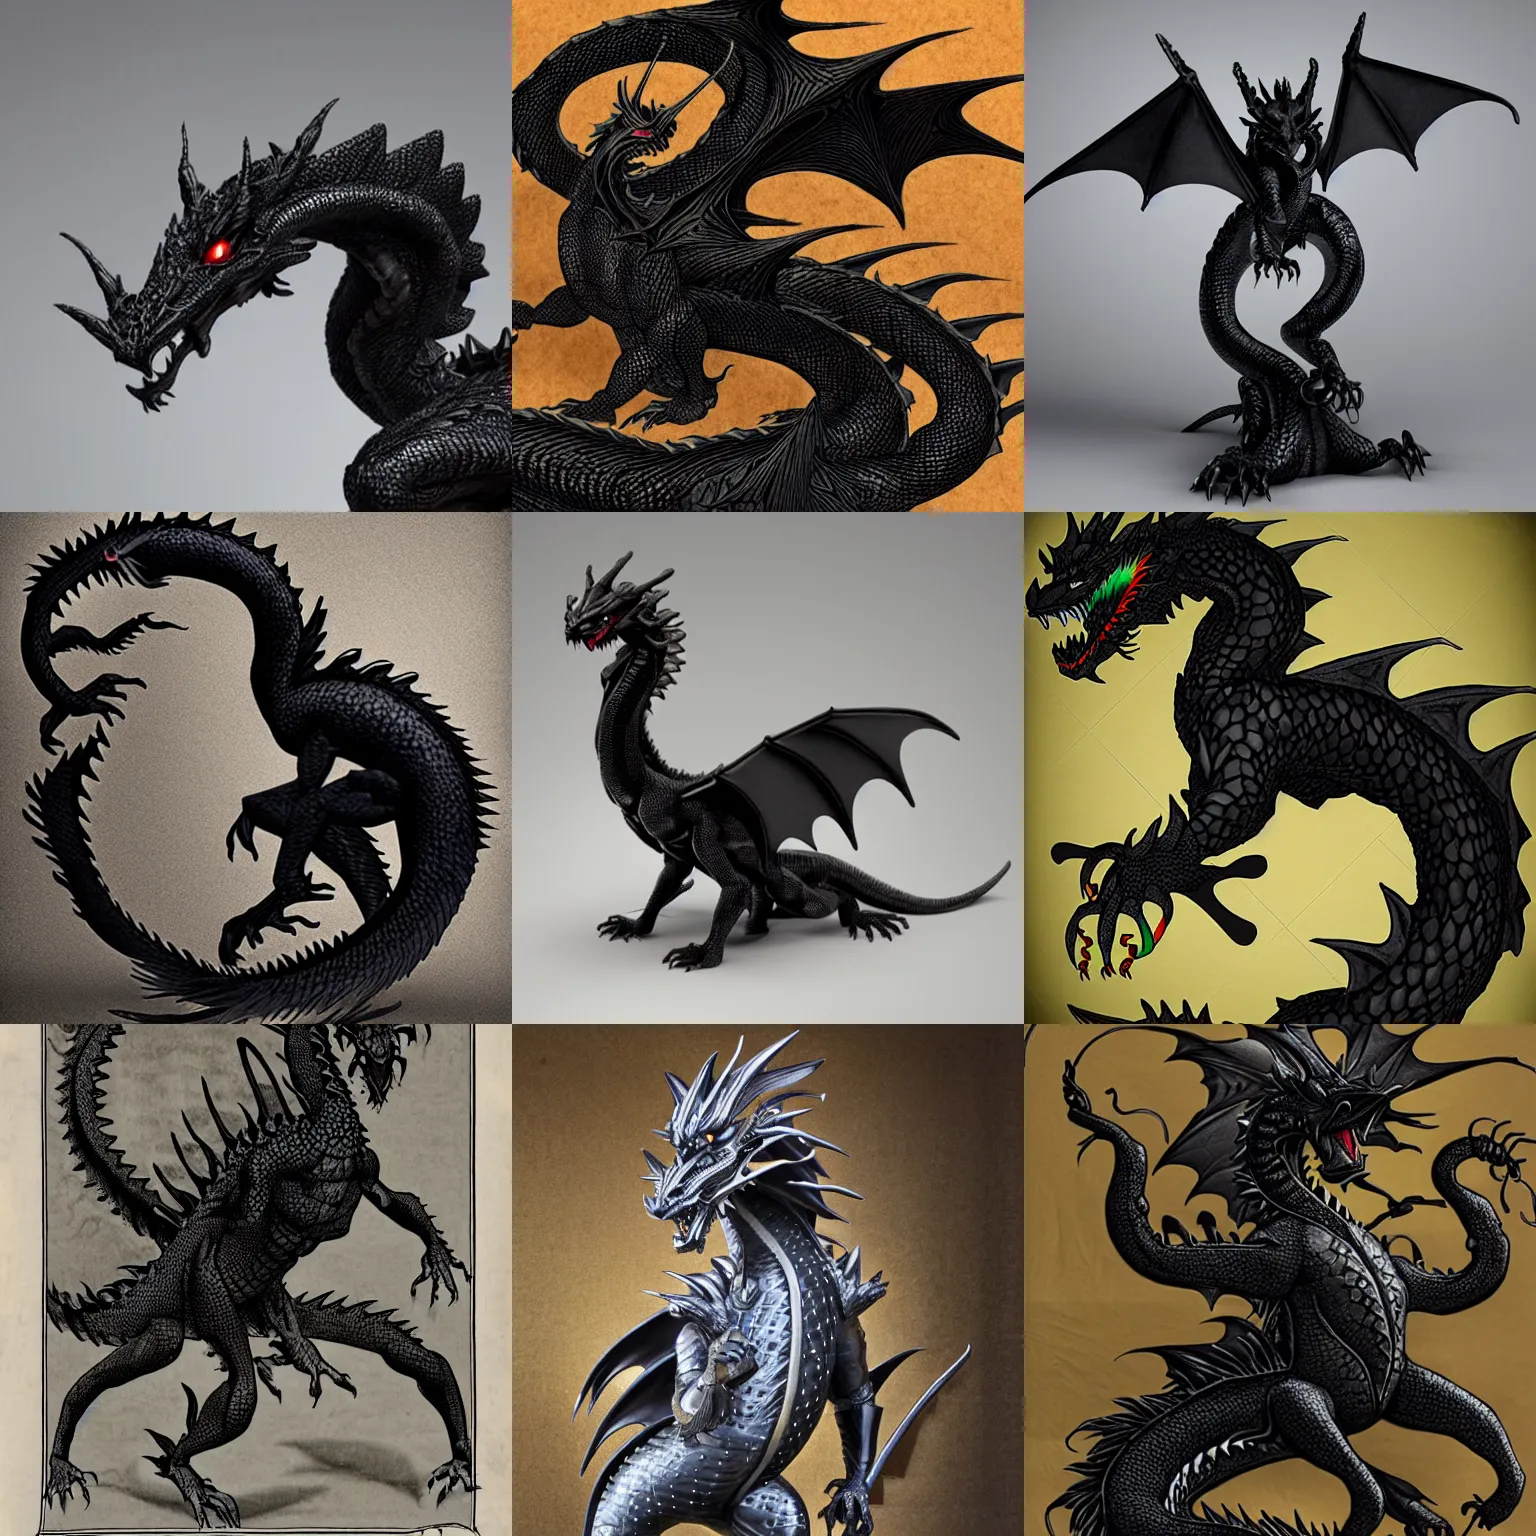 Prompt: Anthropomorphic black dragon